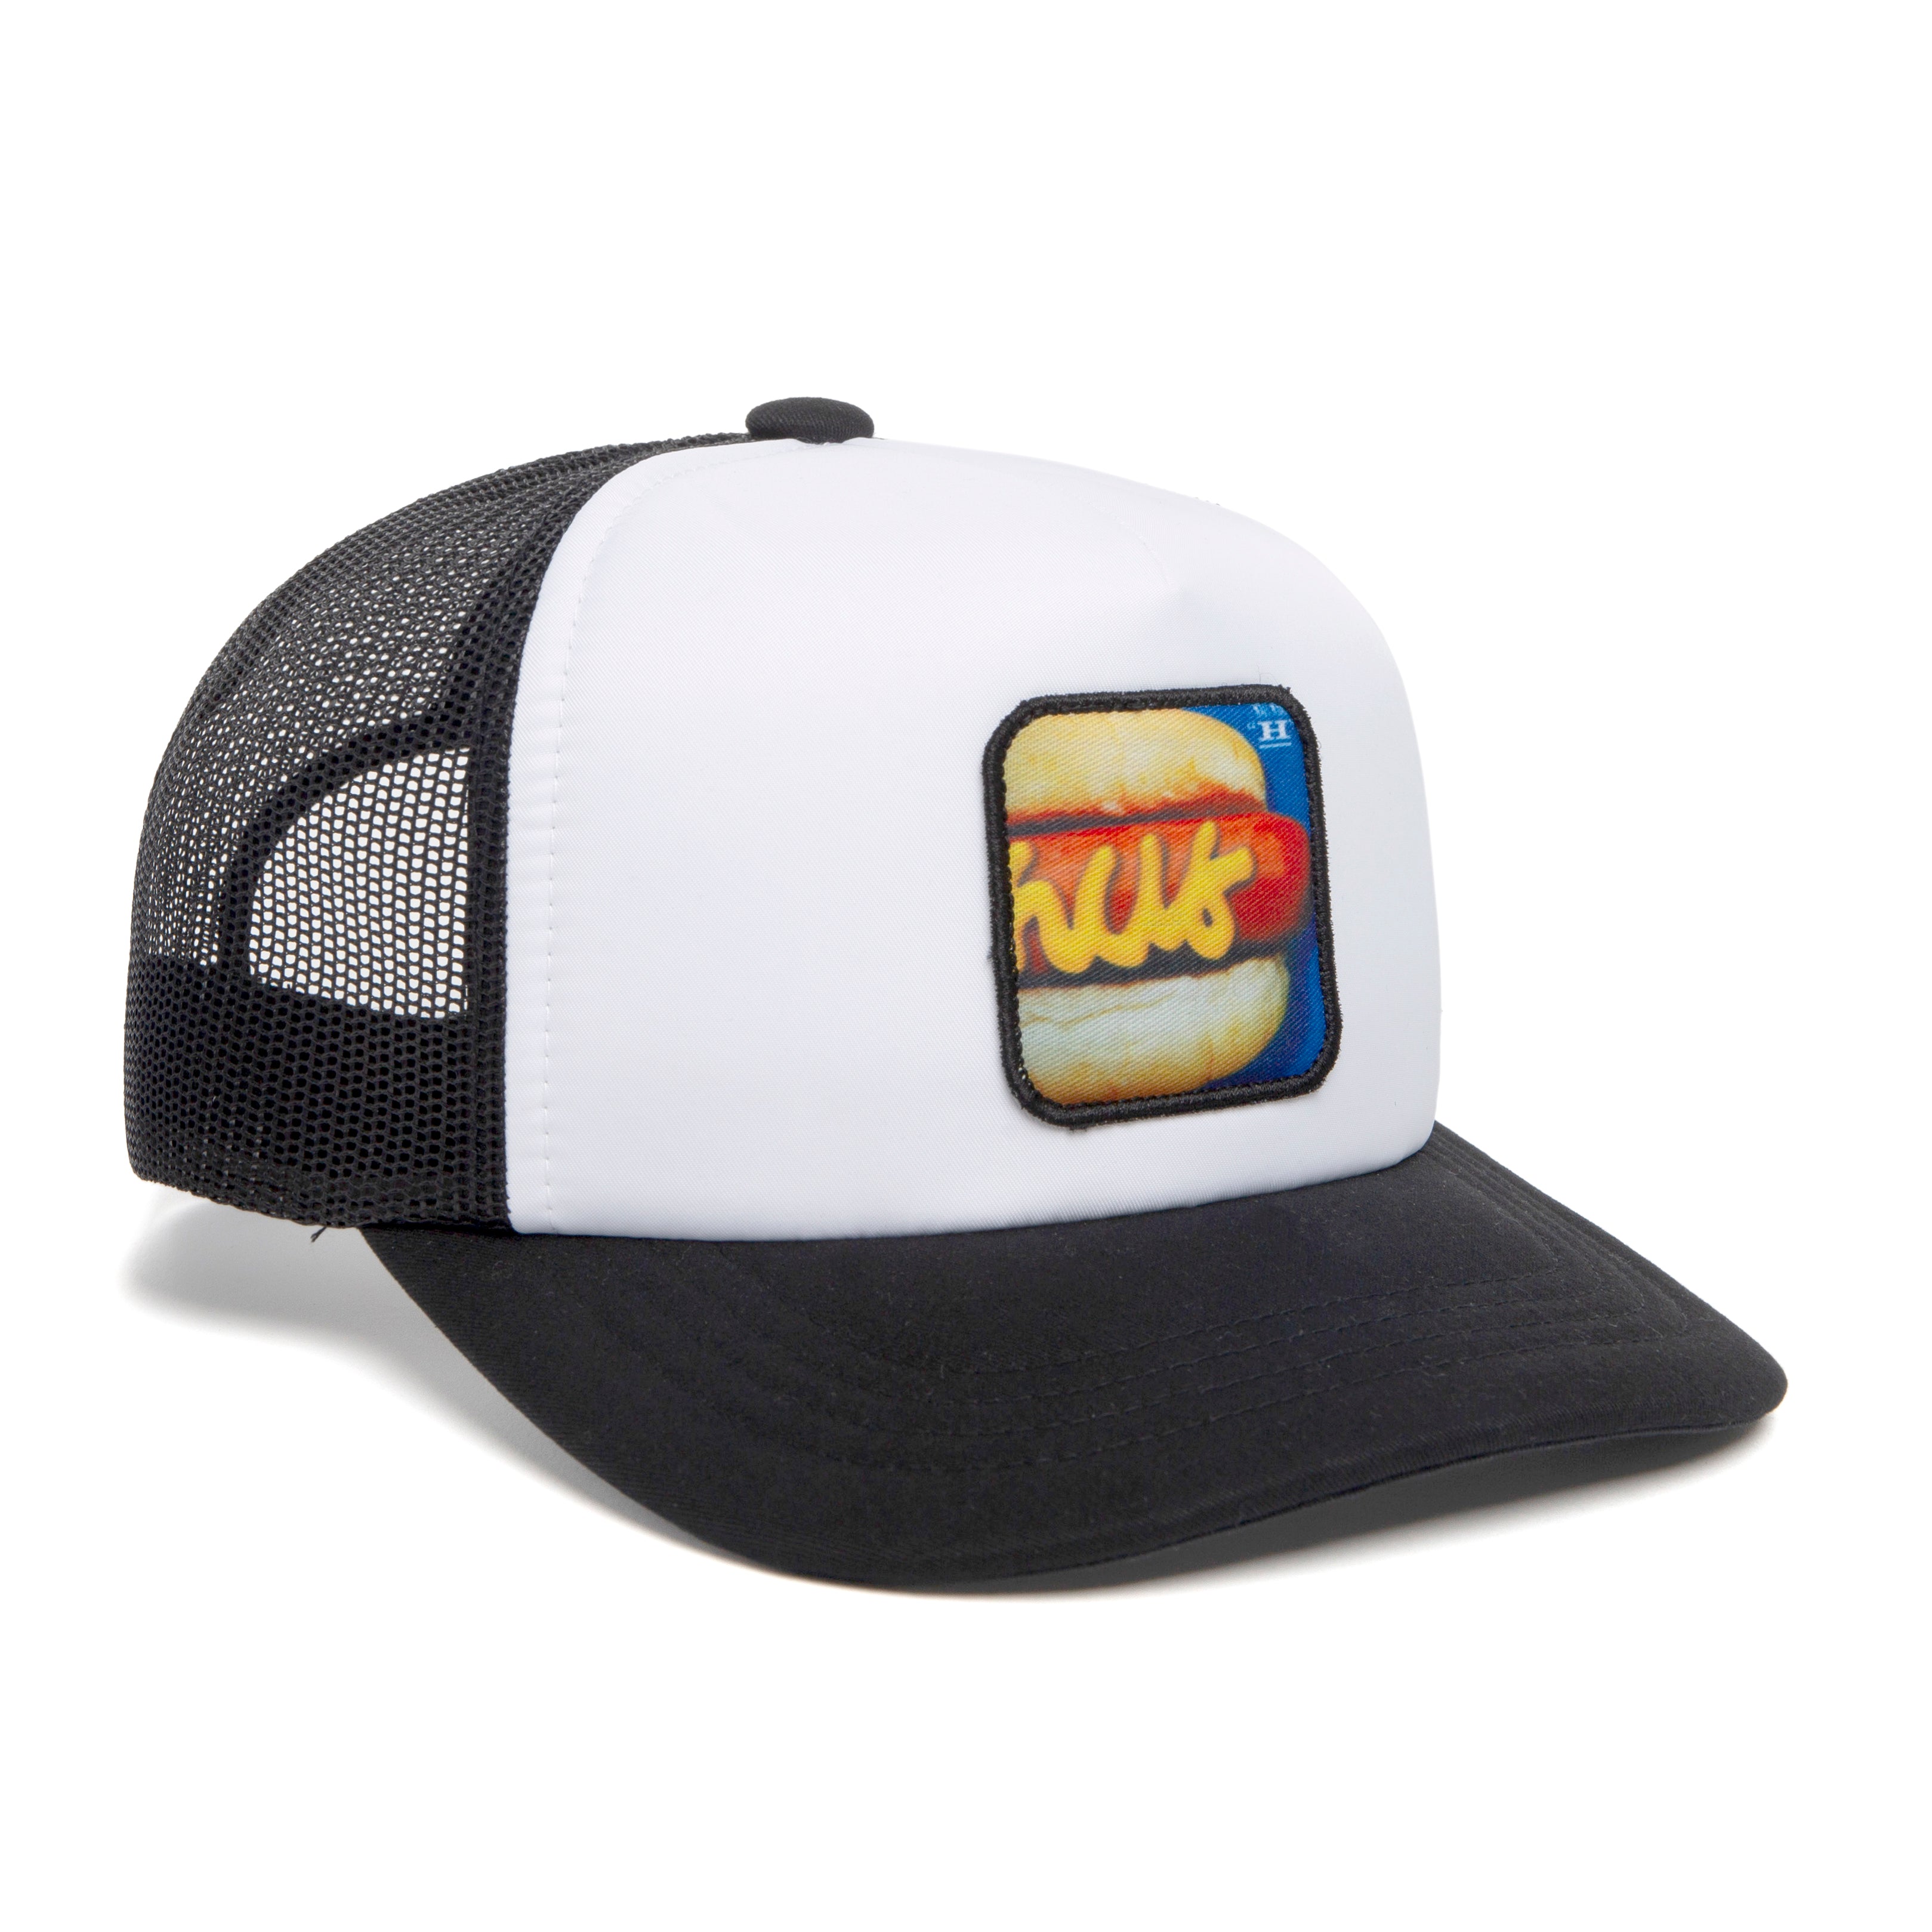 HUF - Hot Dog Trucker Cap - Black - Headz Up 